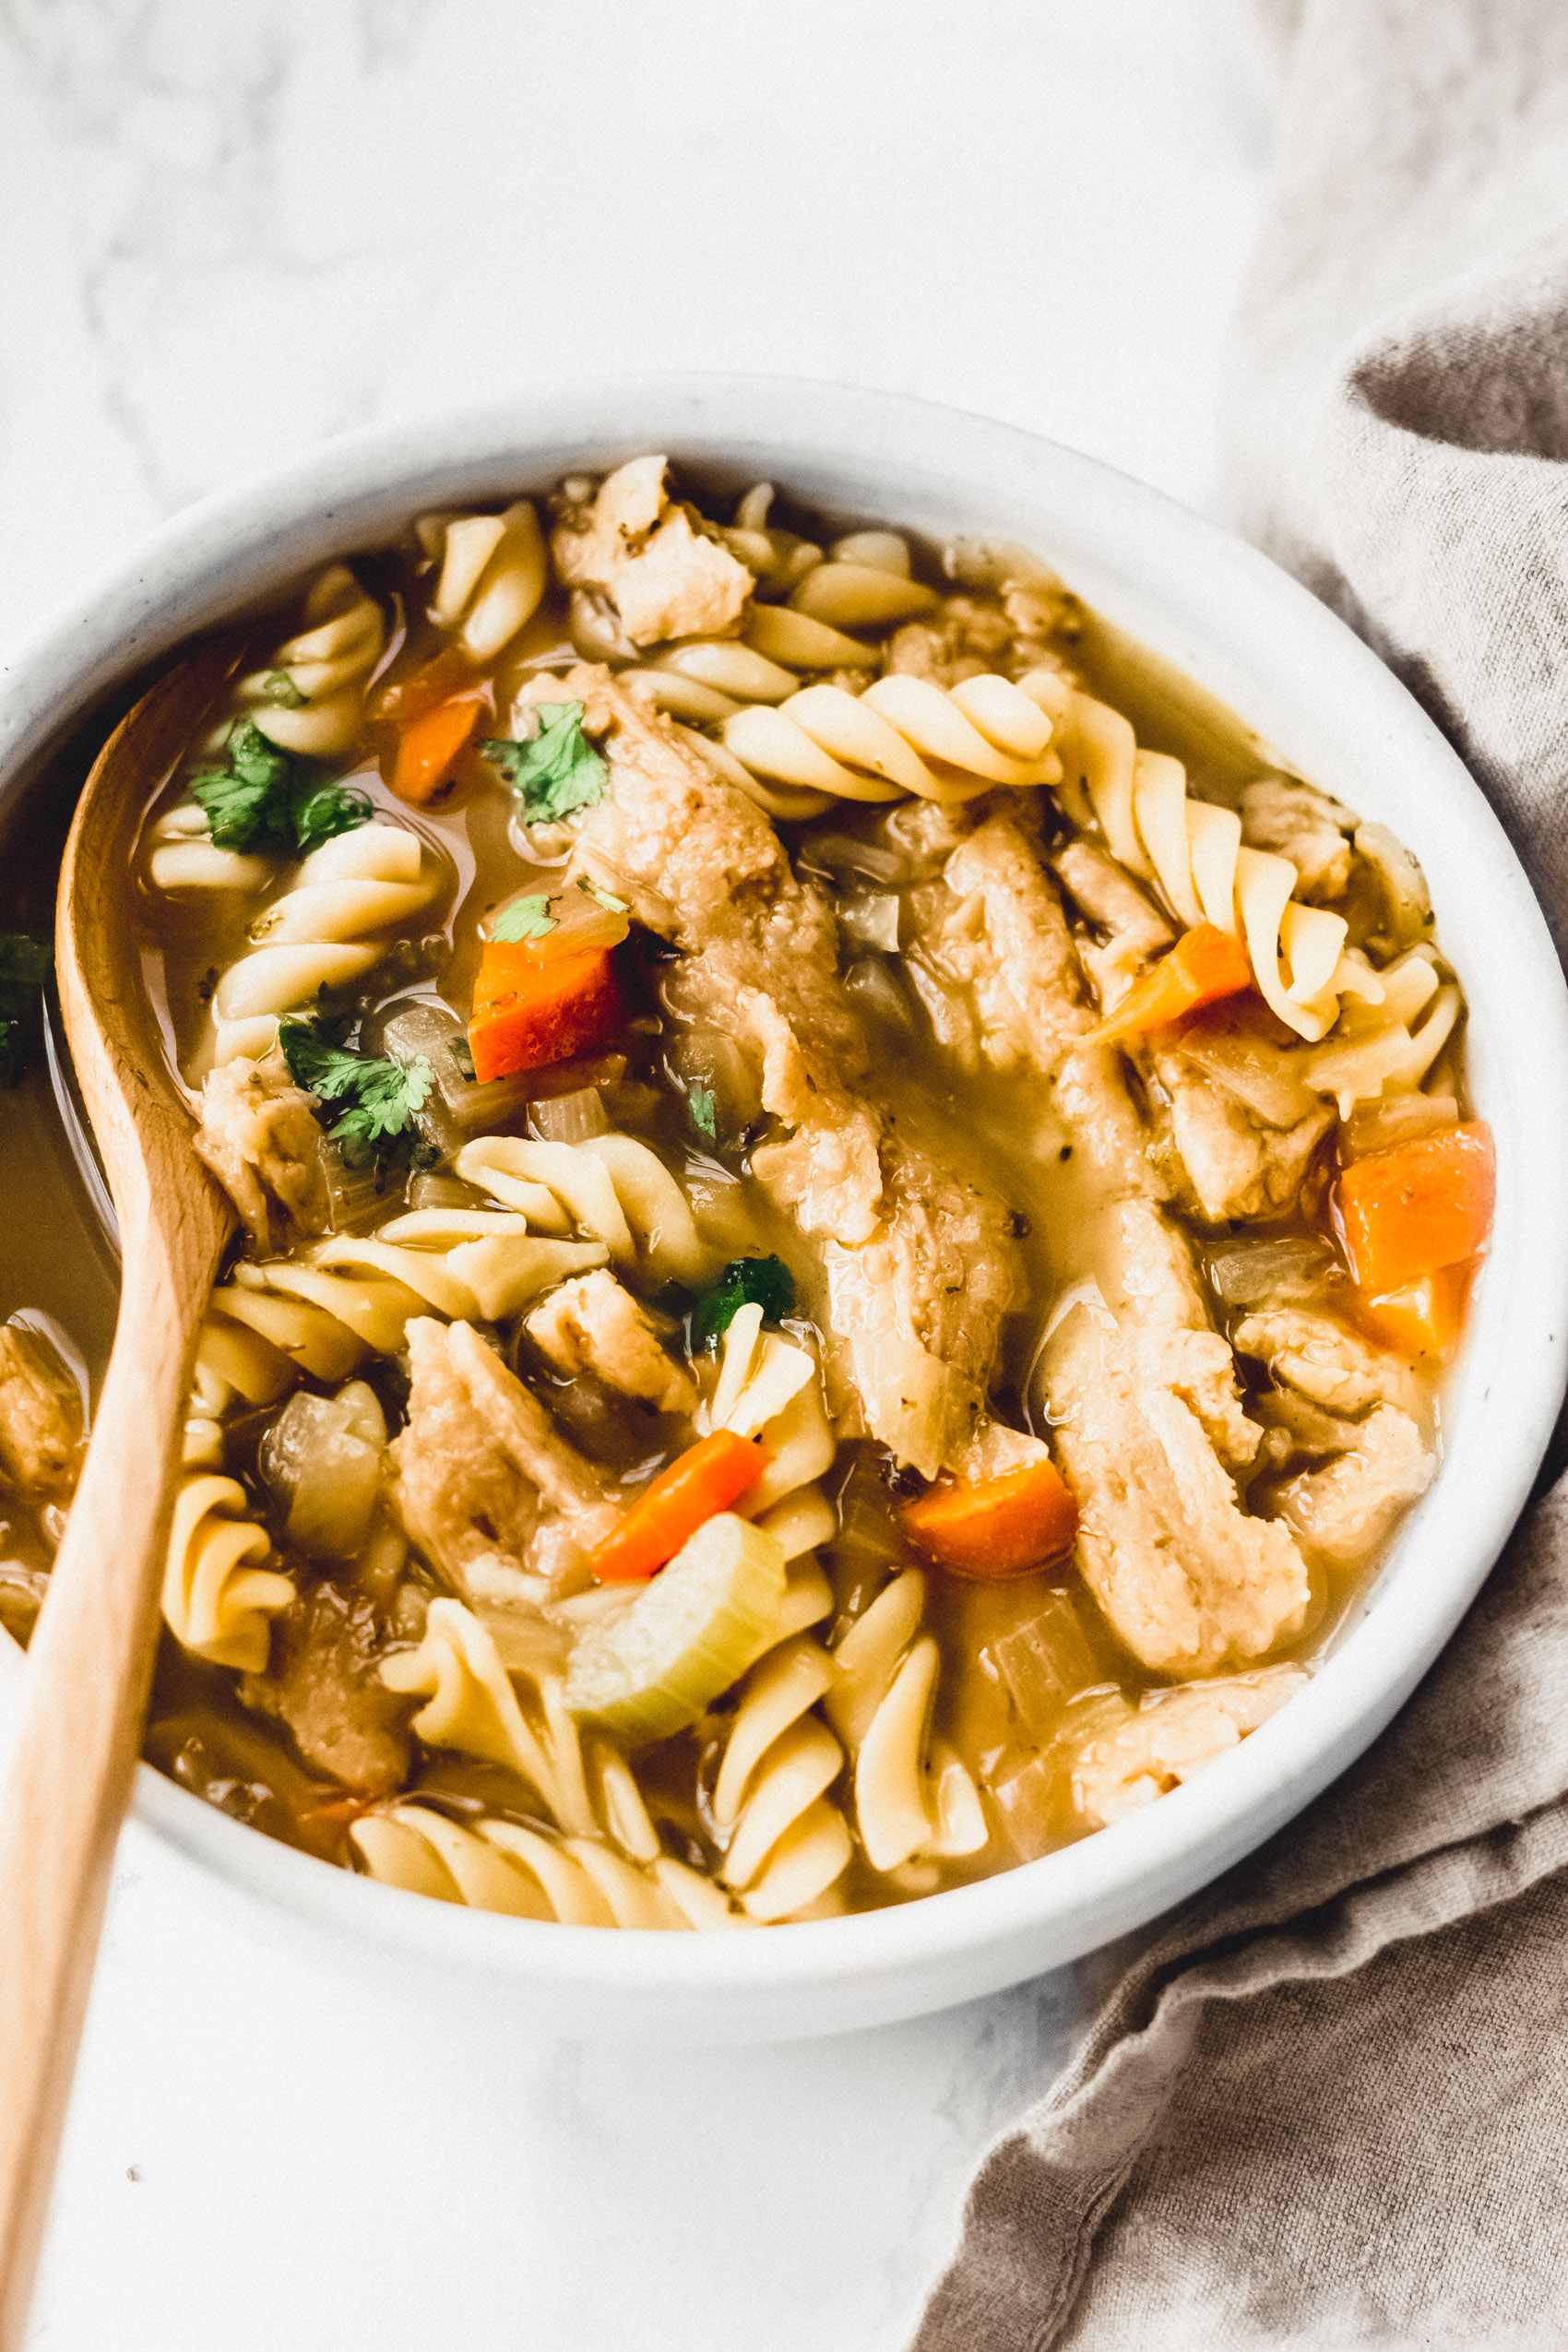 Vegan Chicken Noodle Soup - My Quiet Kitchen